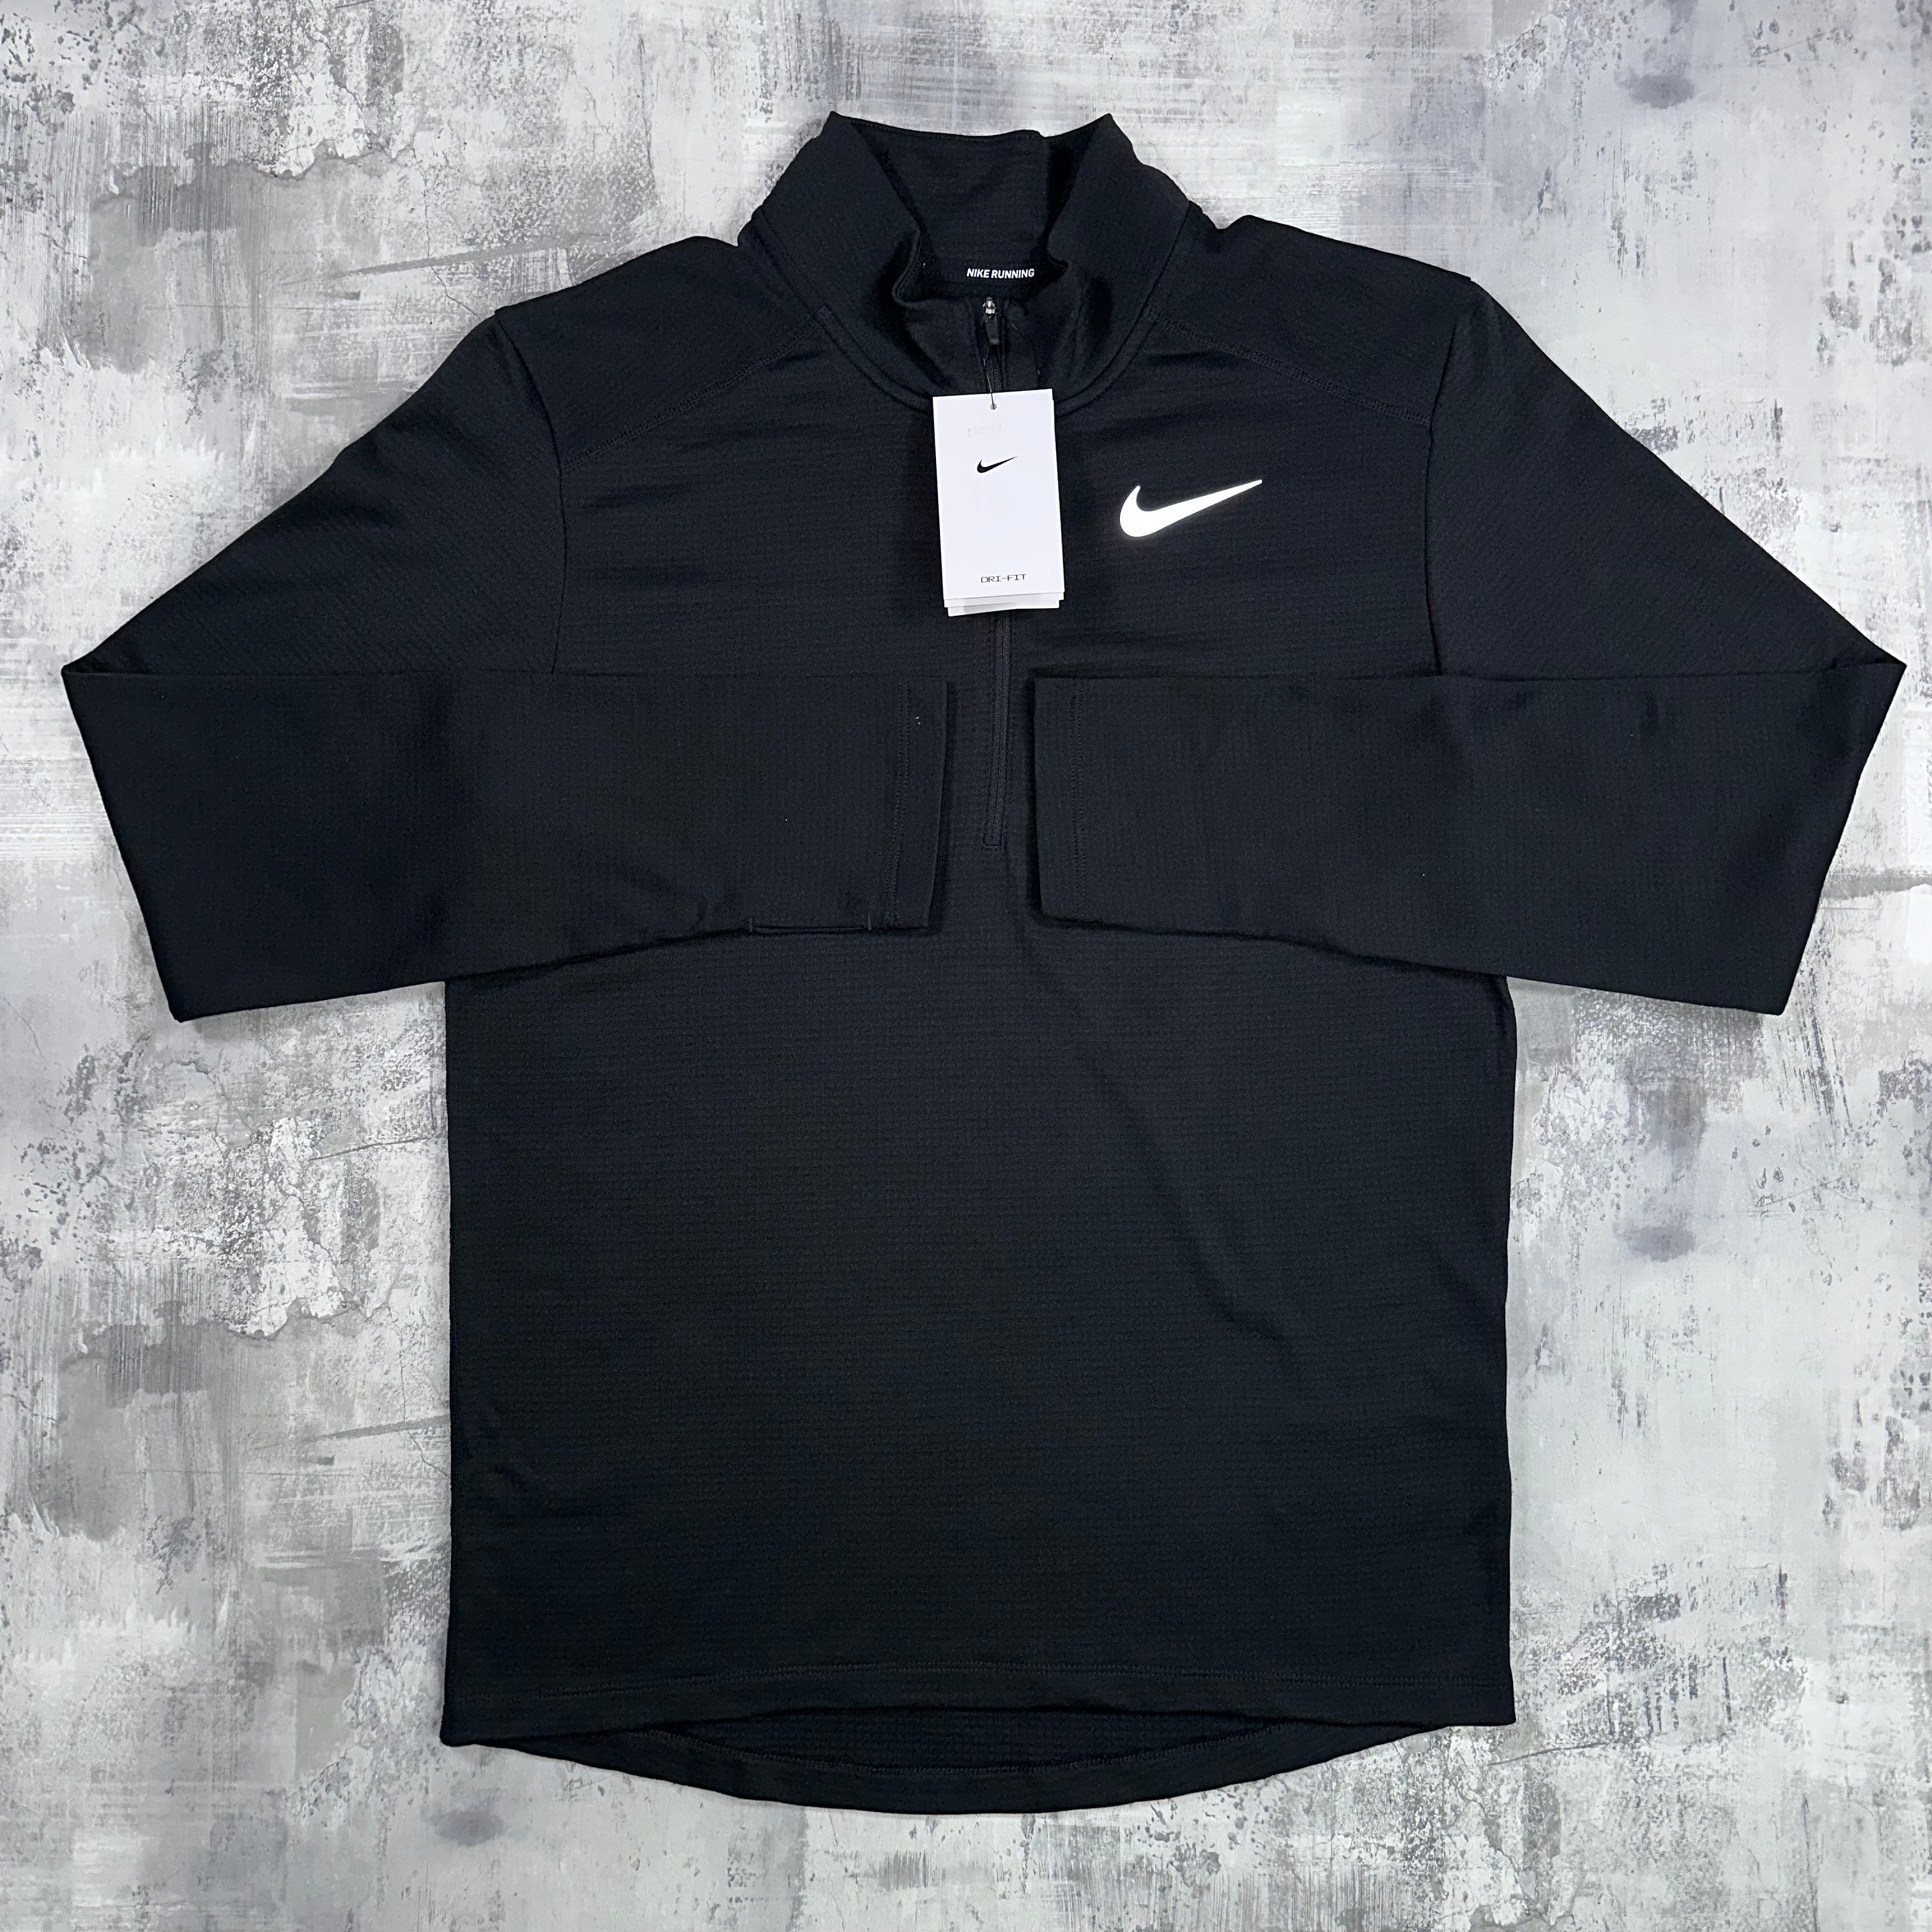 Nike pacer 1/2 zip Black